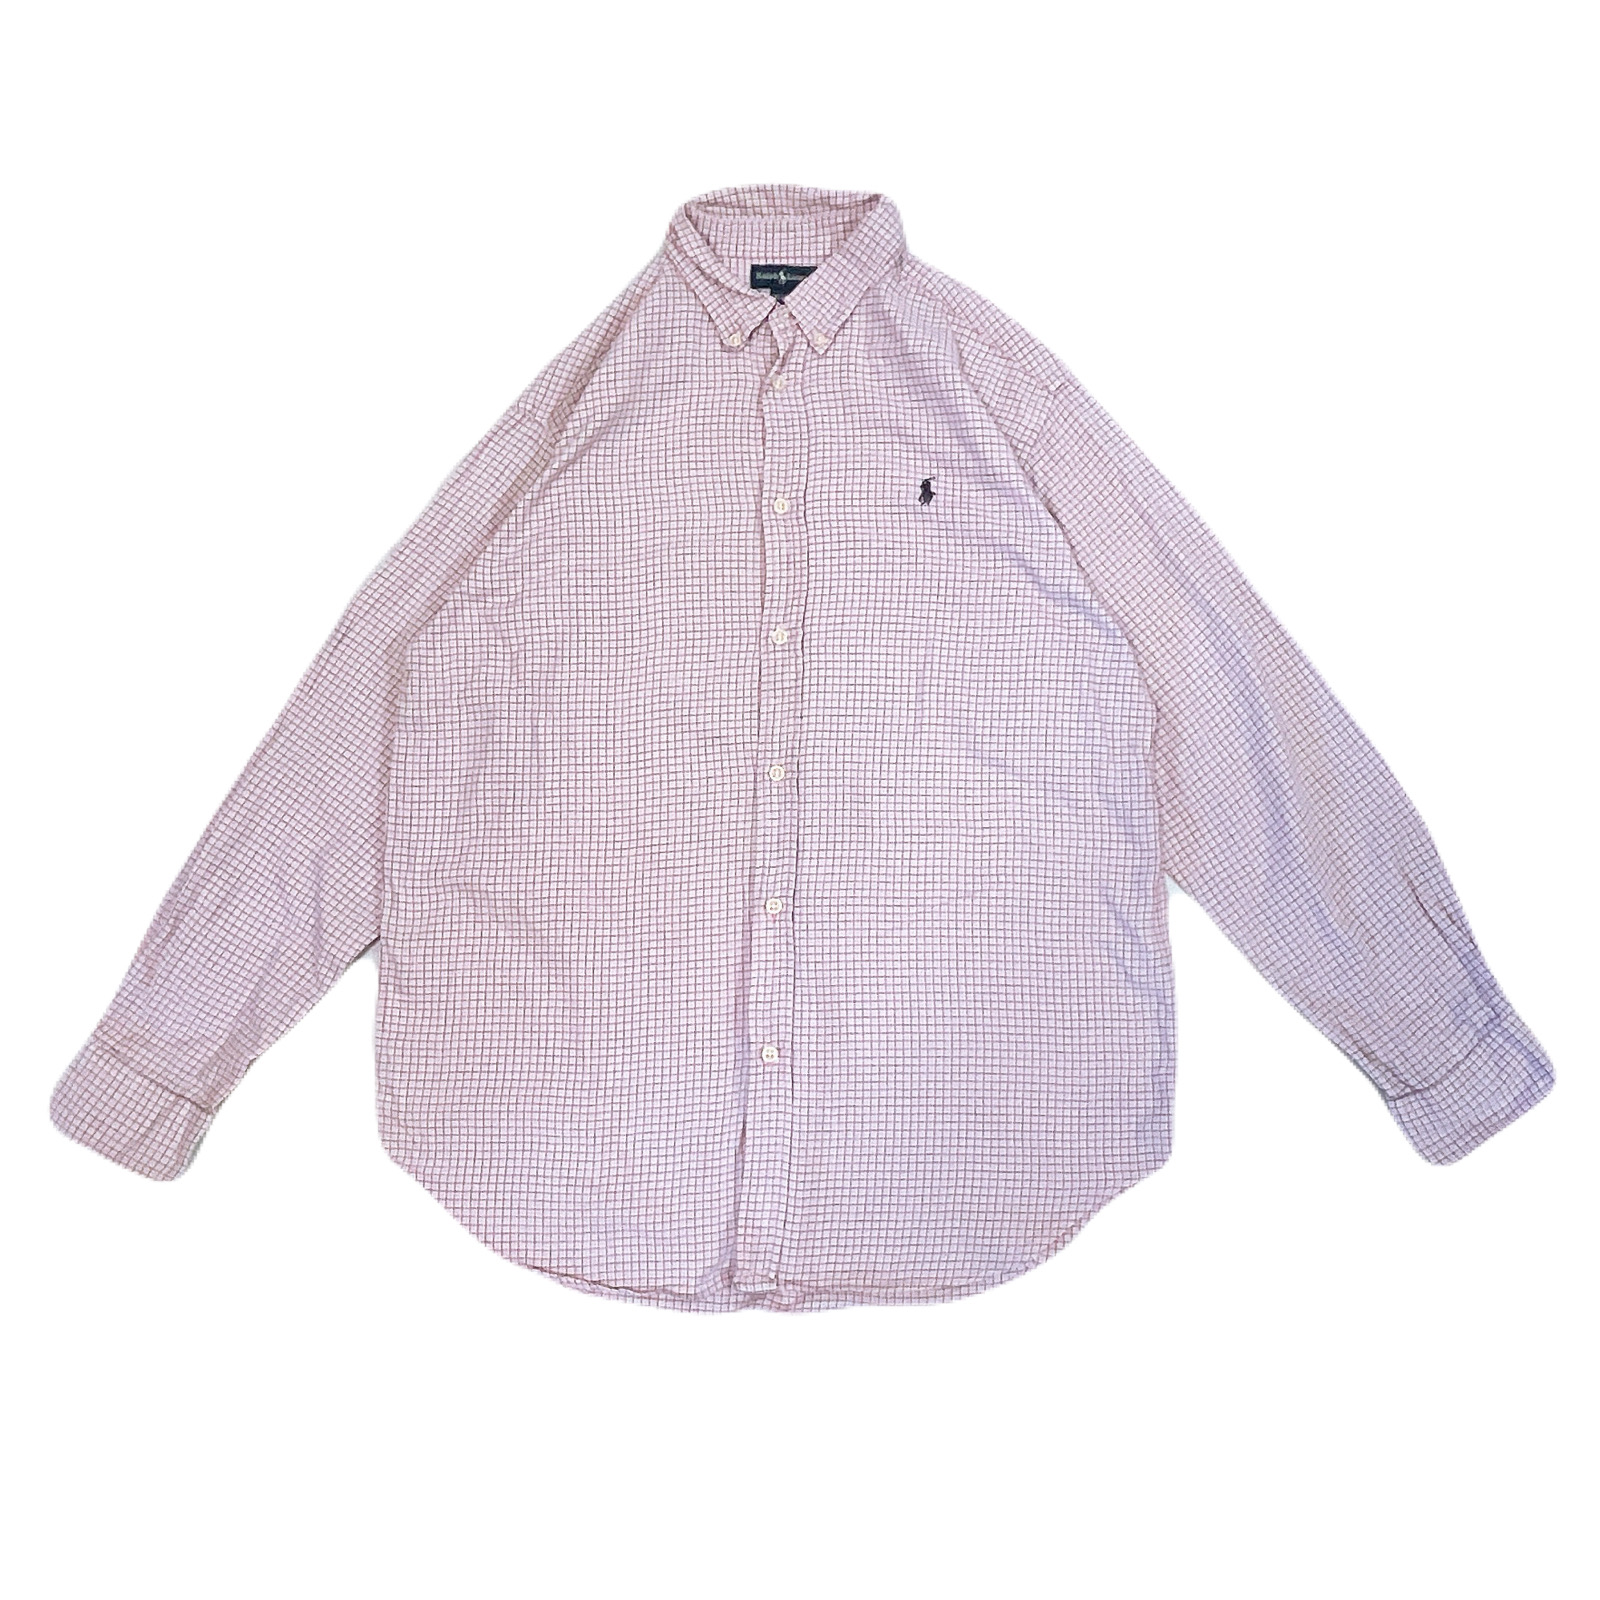 XLsize Ralph Lauren Check shirt 24041609 ラルフローレン チェック 